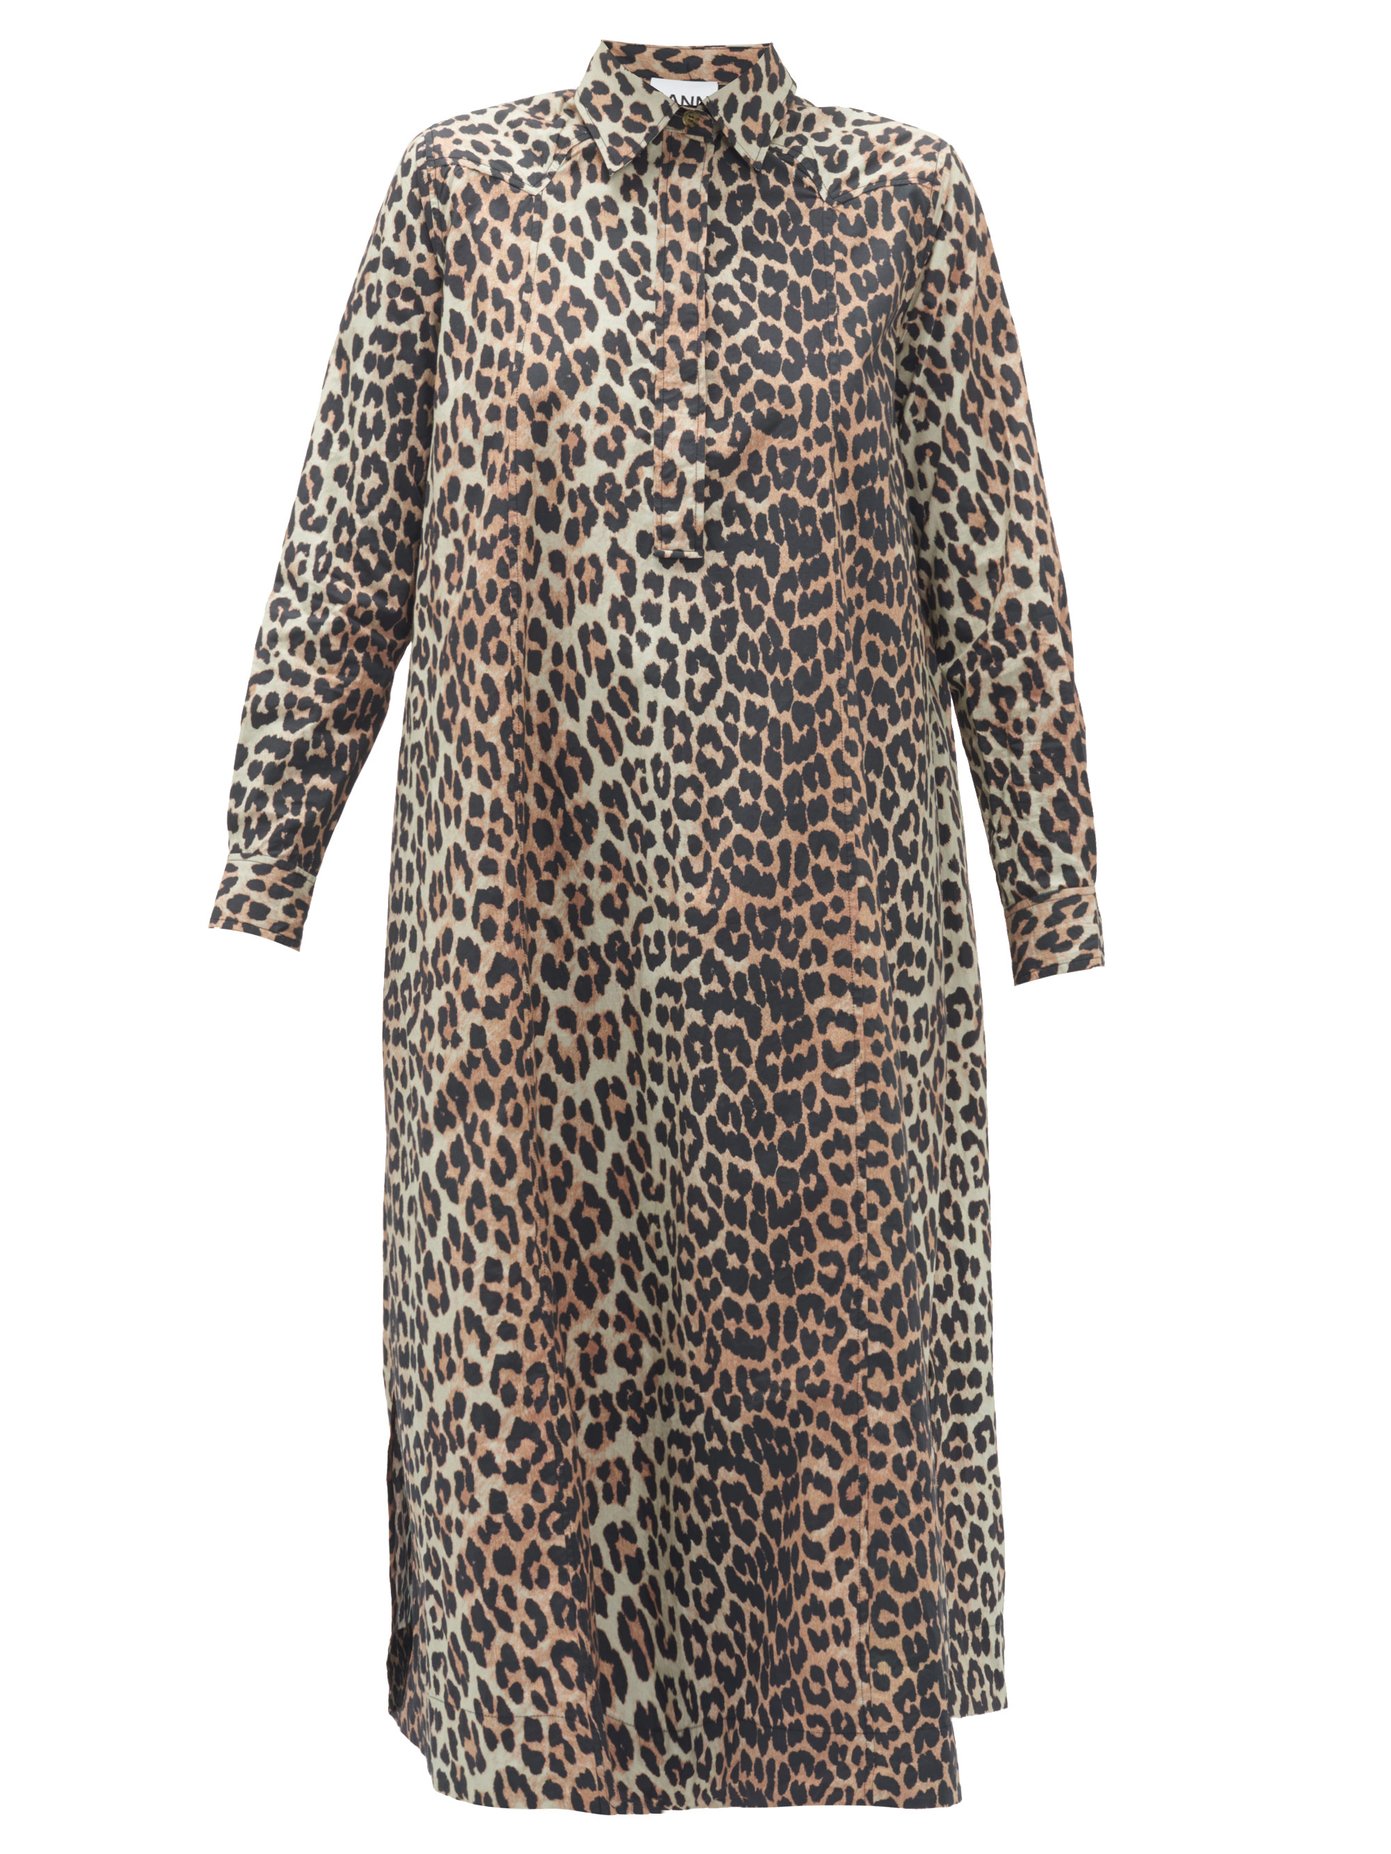 leopard print shirt dress australia